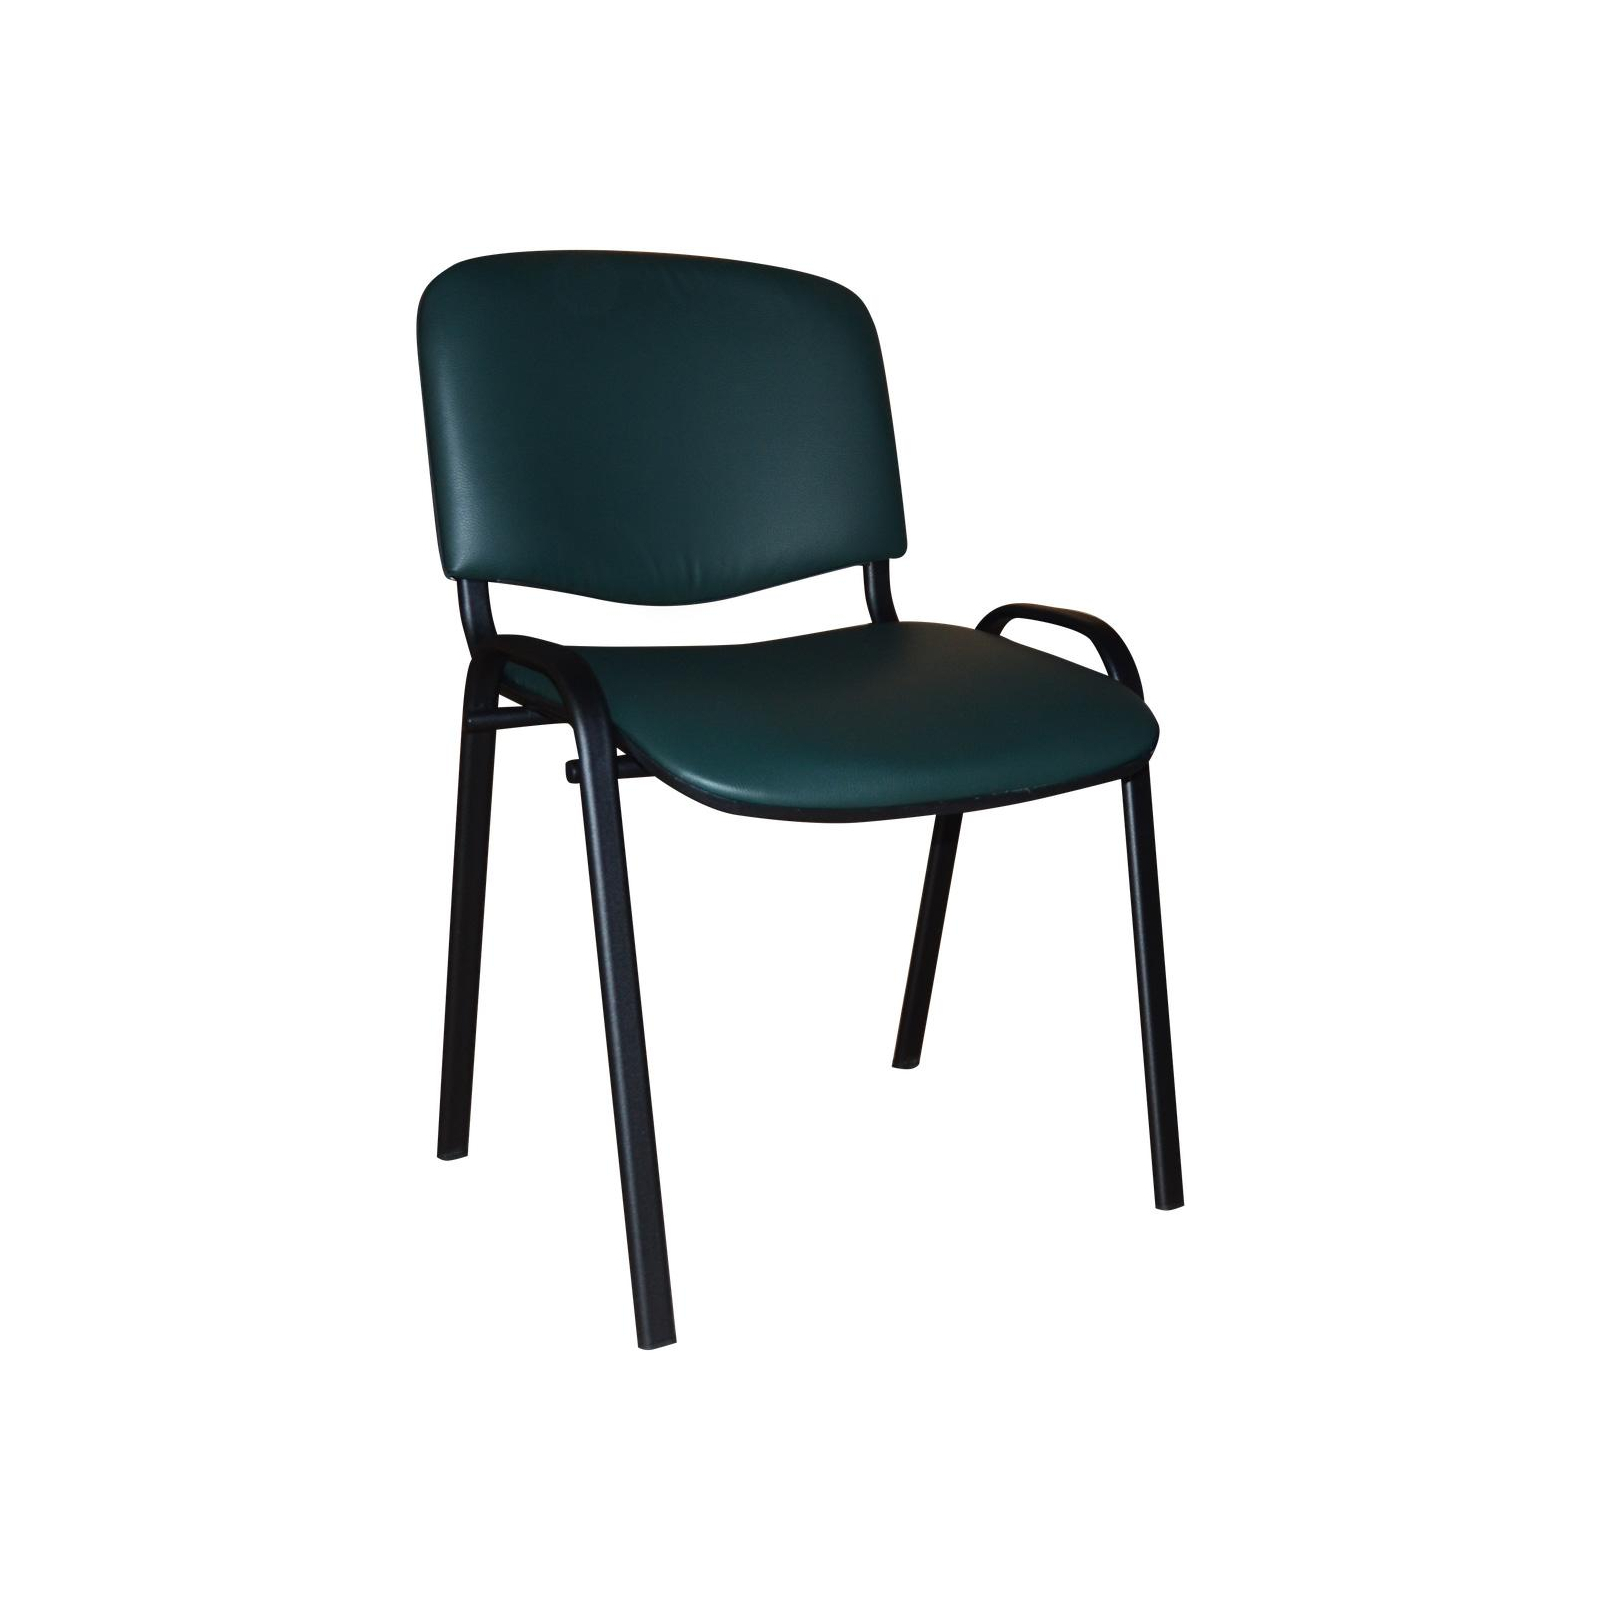 Офисный стул Примтекс плюс ISO black S-6214